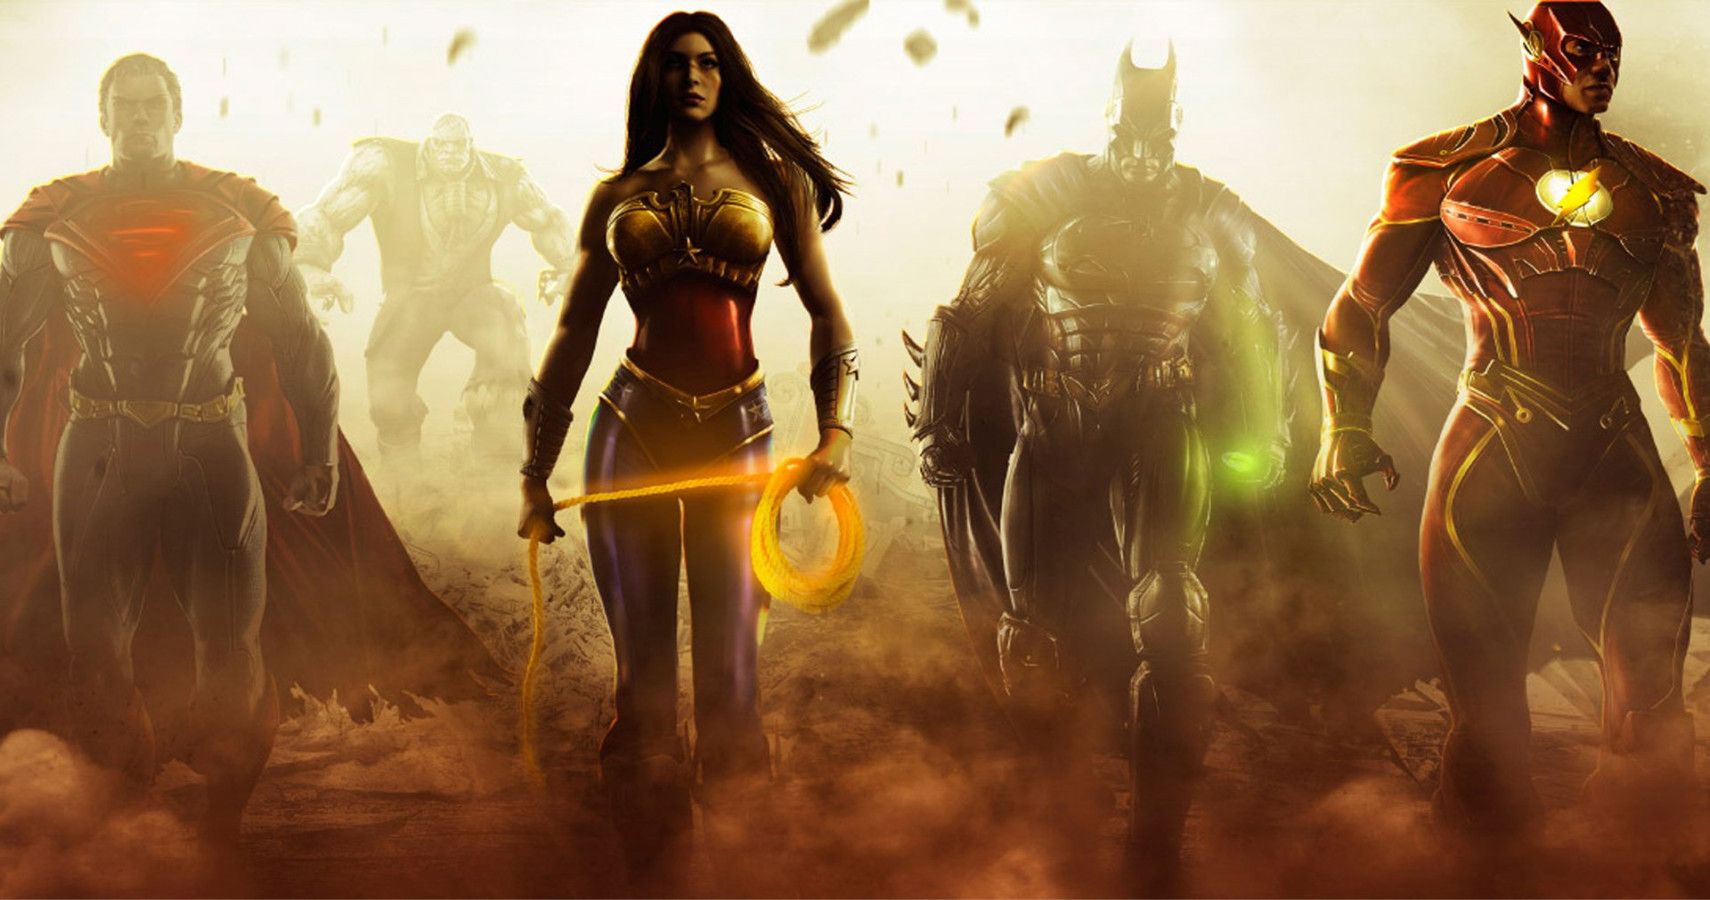 Ed Boon Teases Mortal Kombat 11 & Injustice: Gods Among Us 2